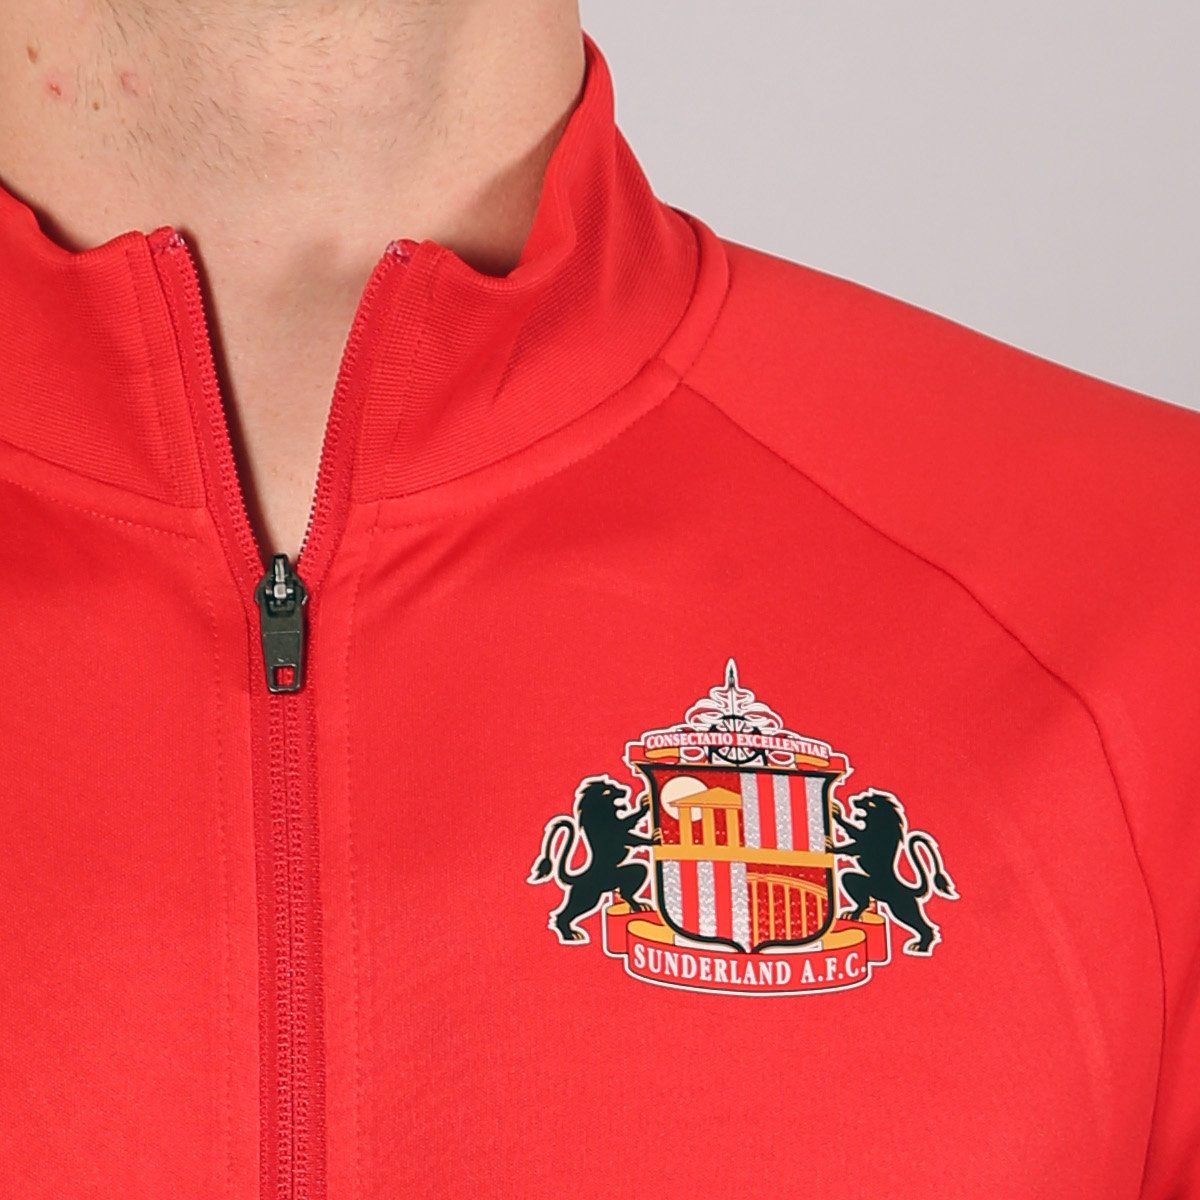 Buy the 21-22 Nike Track Jacket online at Sunderland AFC Store